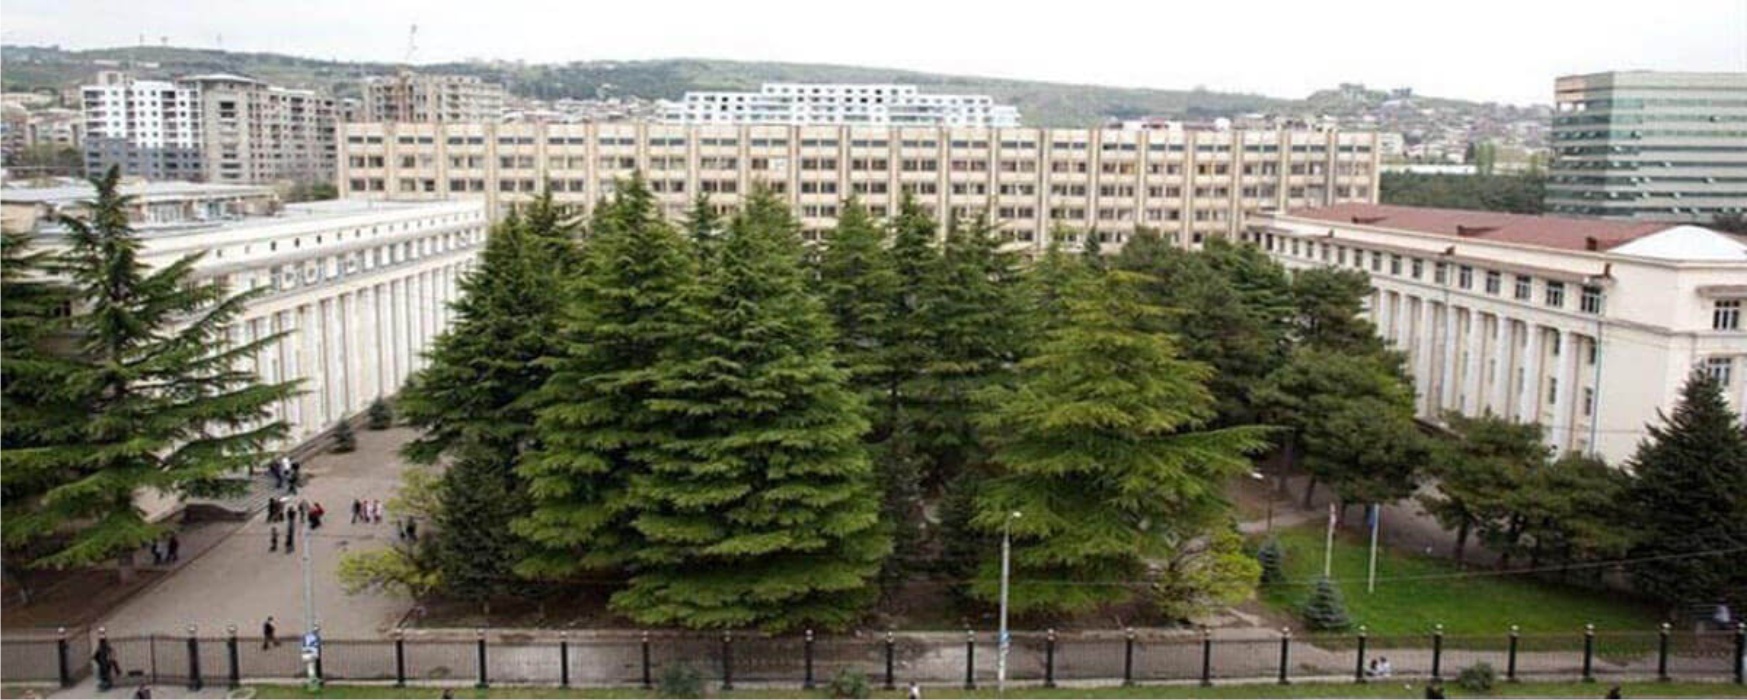 Tbilisi State Medical University 01